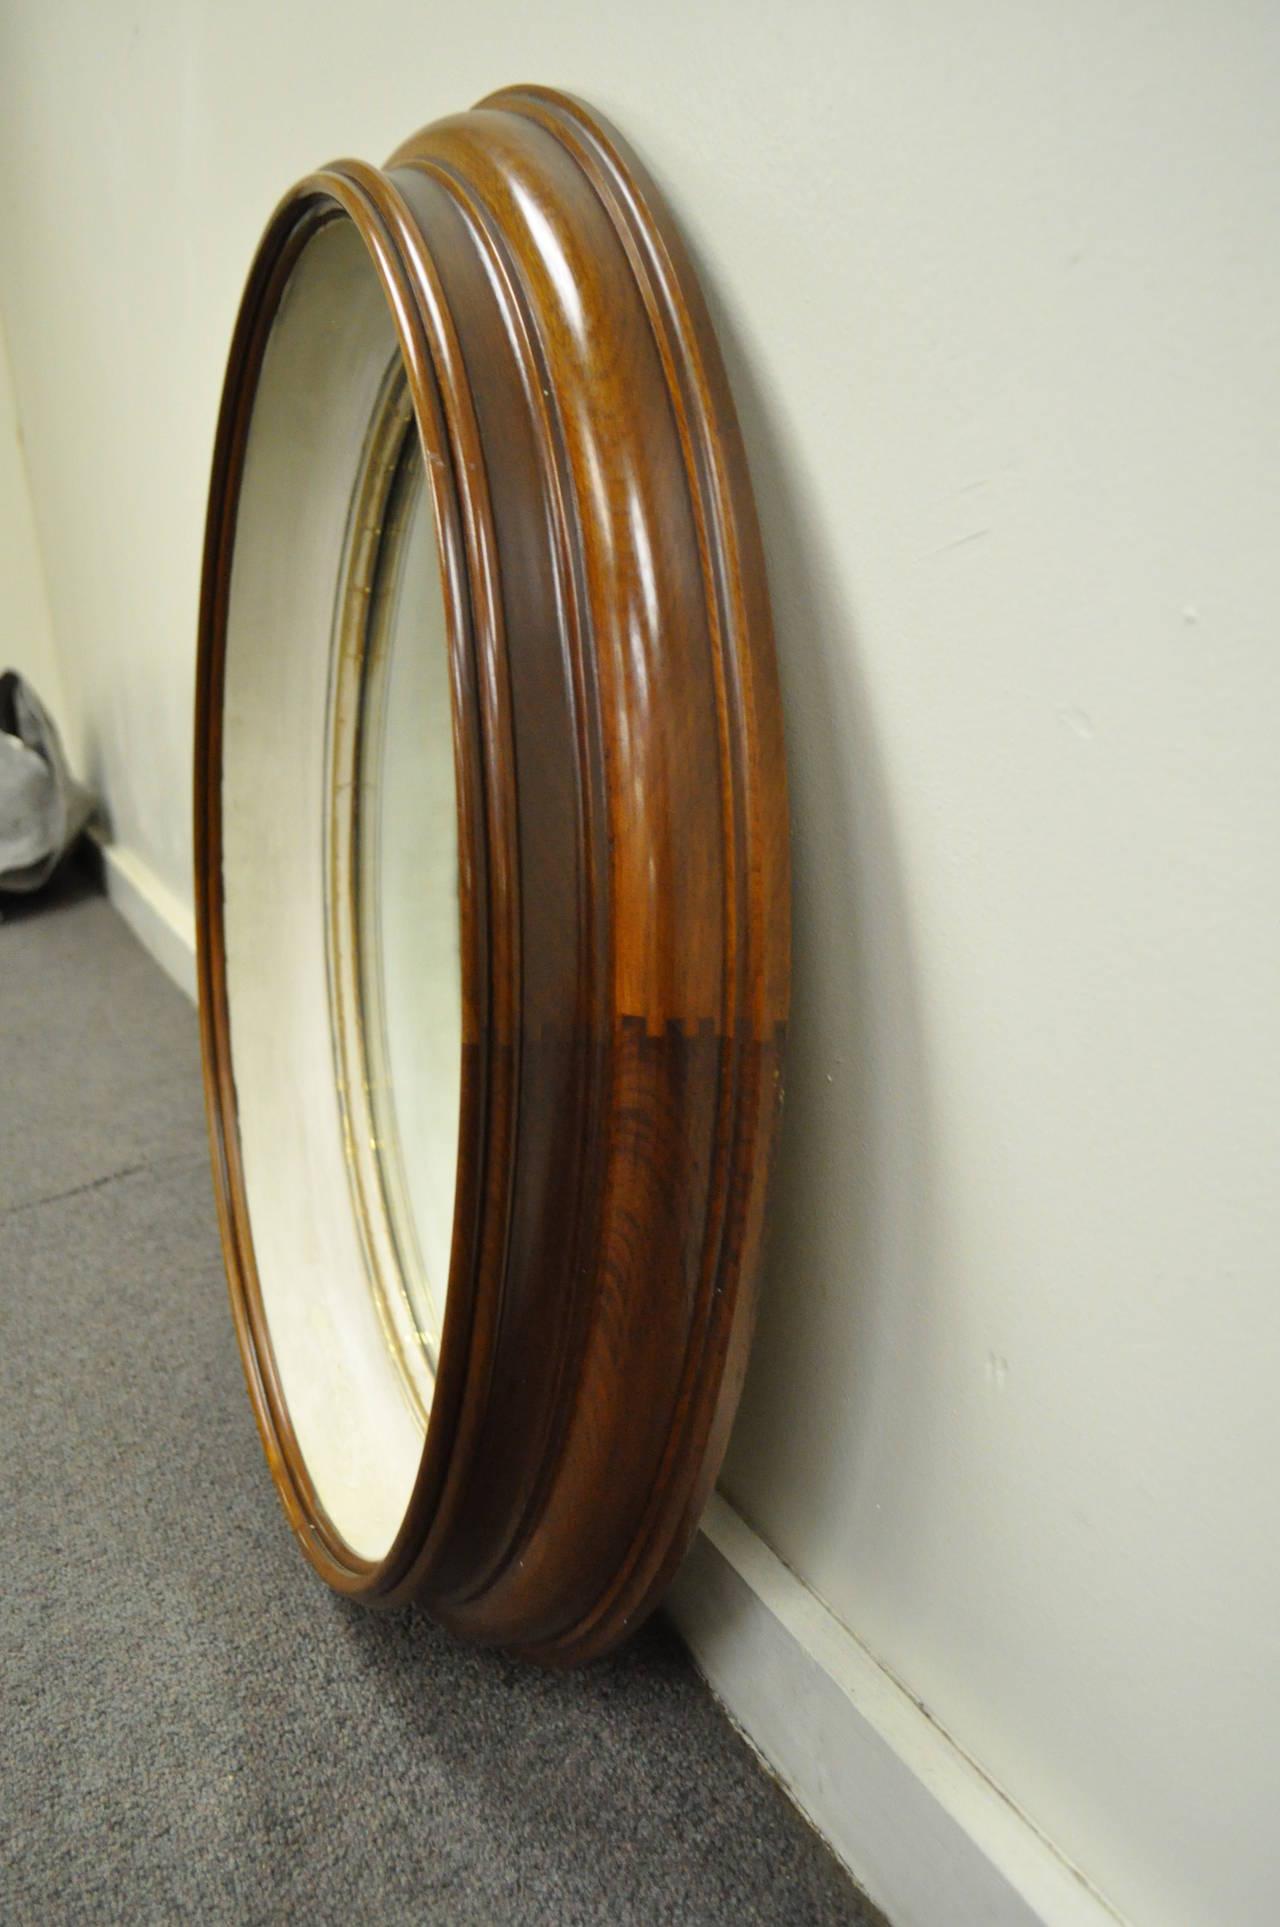 walnut oval mirror